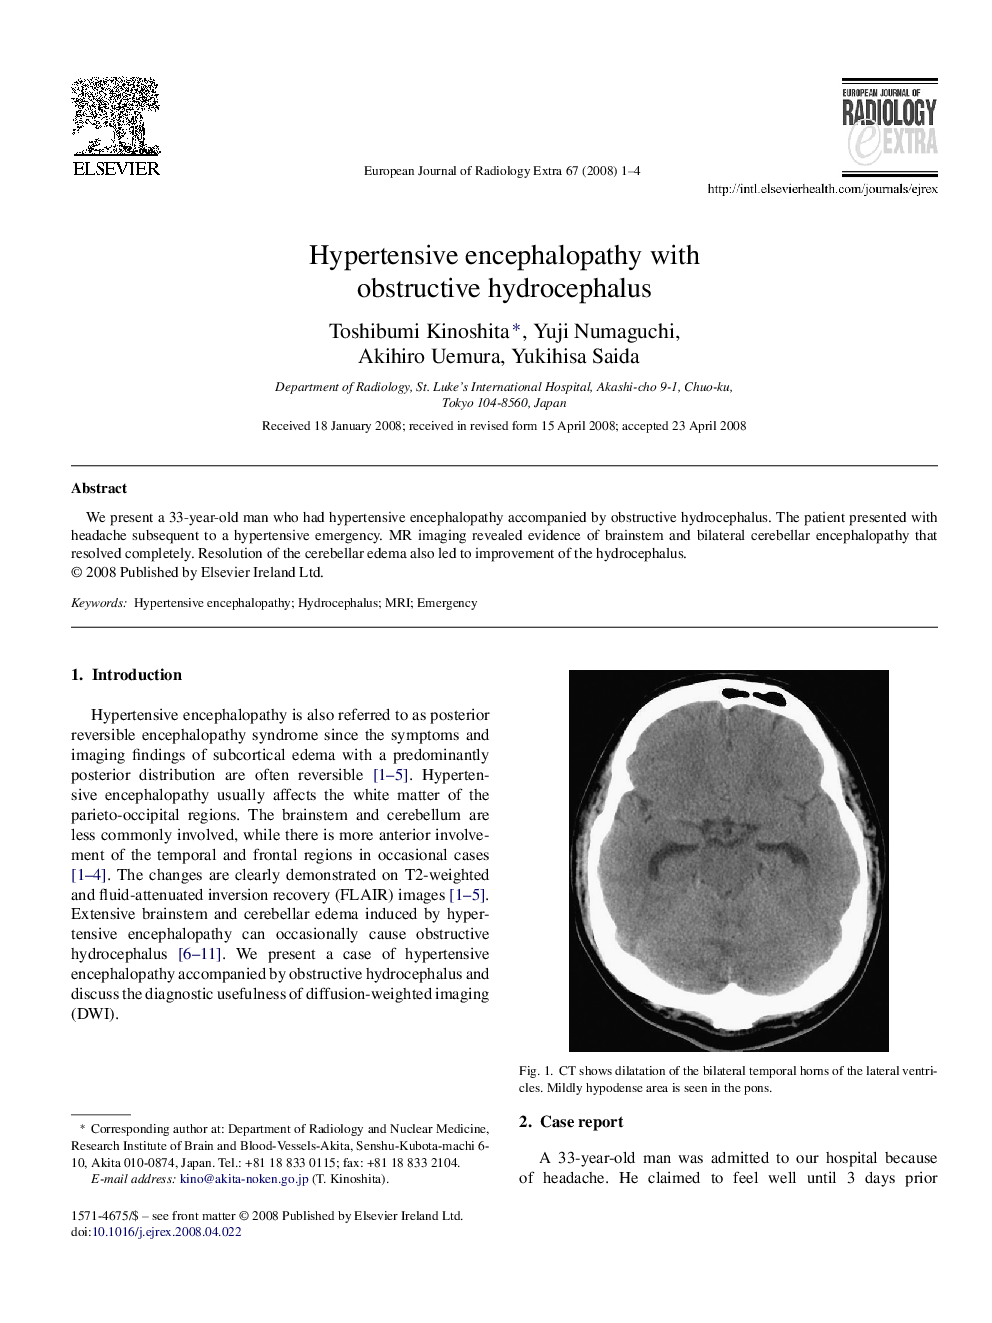 Hypertensive encephalopathy with obstructive hydrocephalus